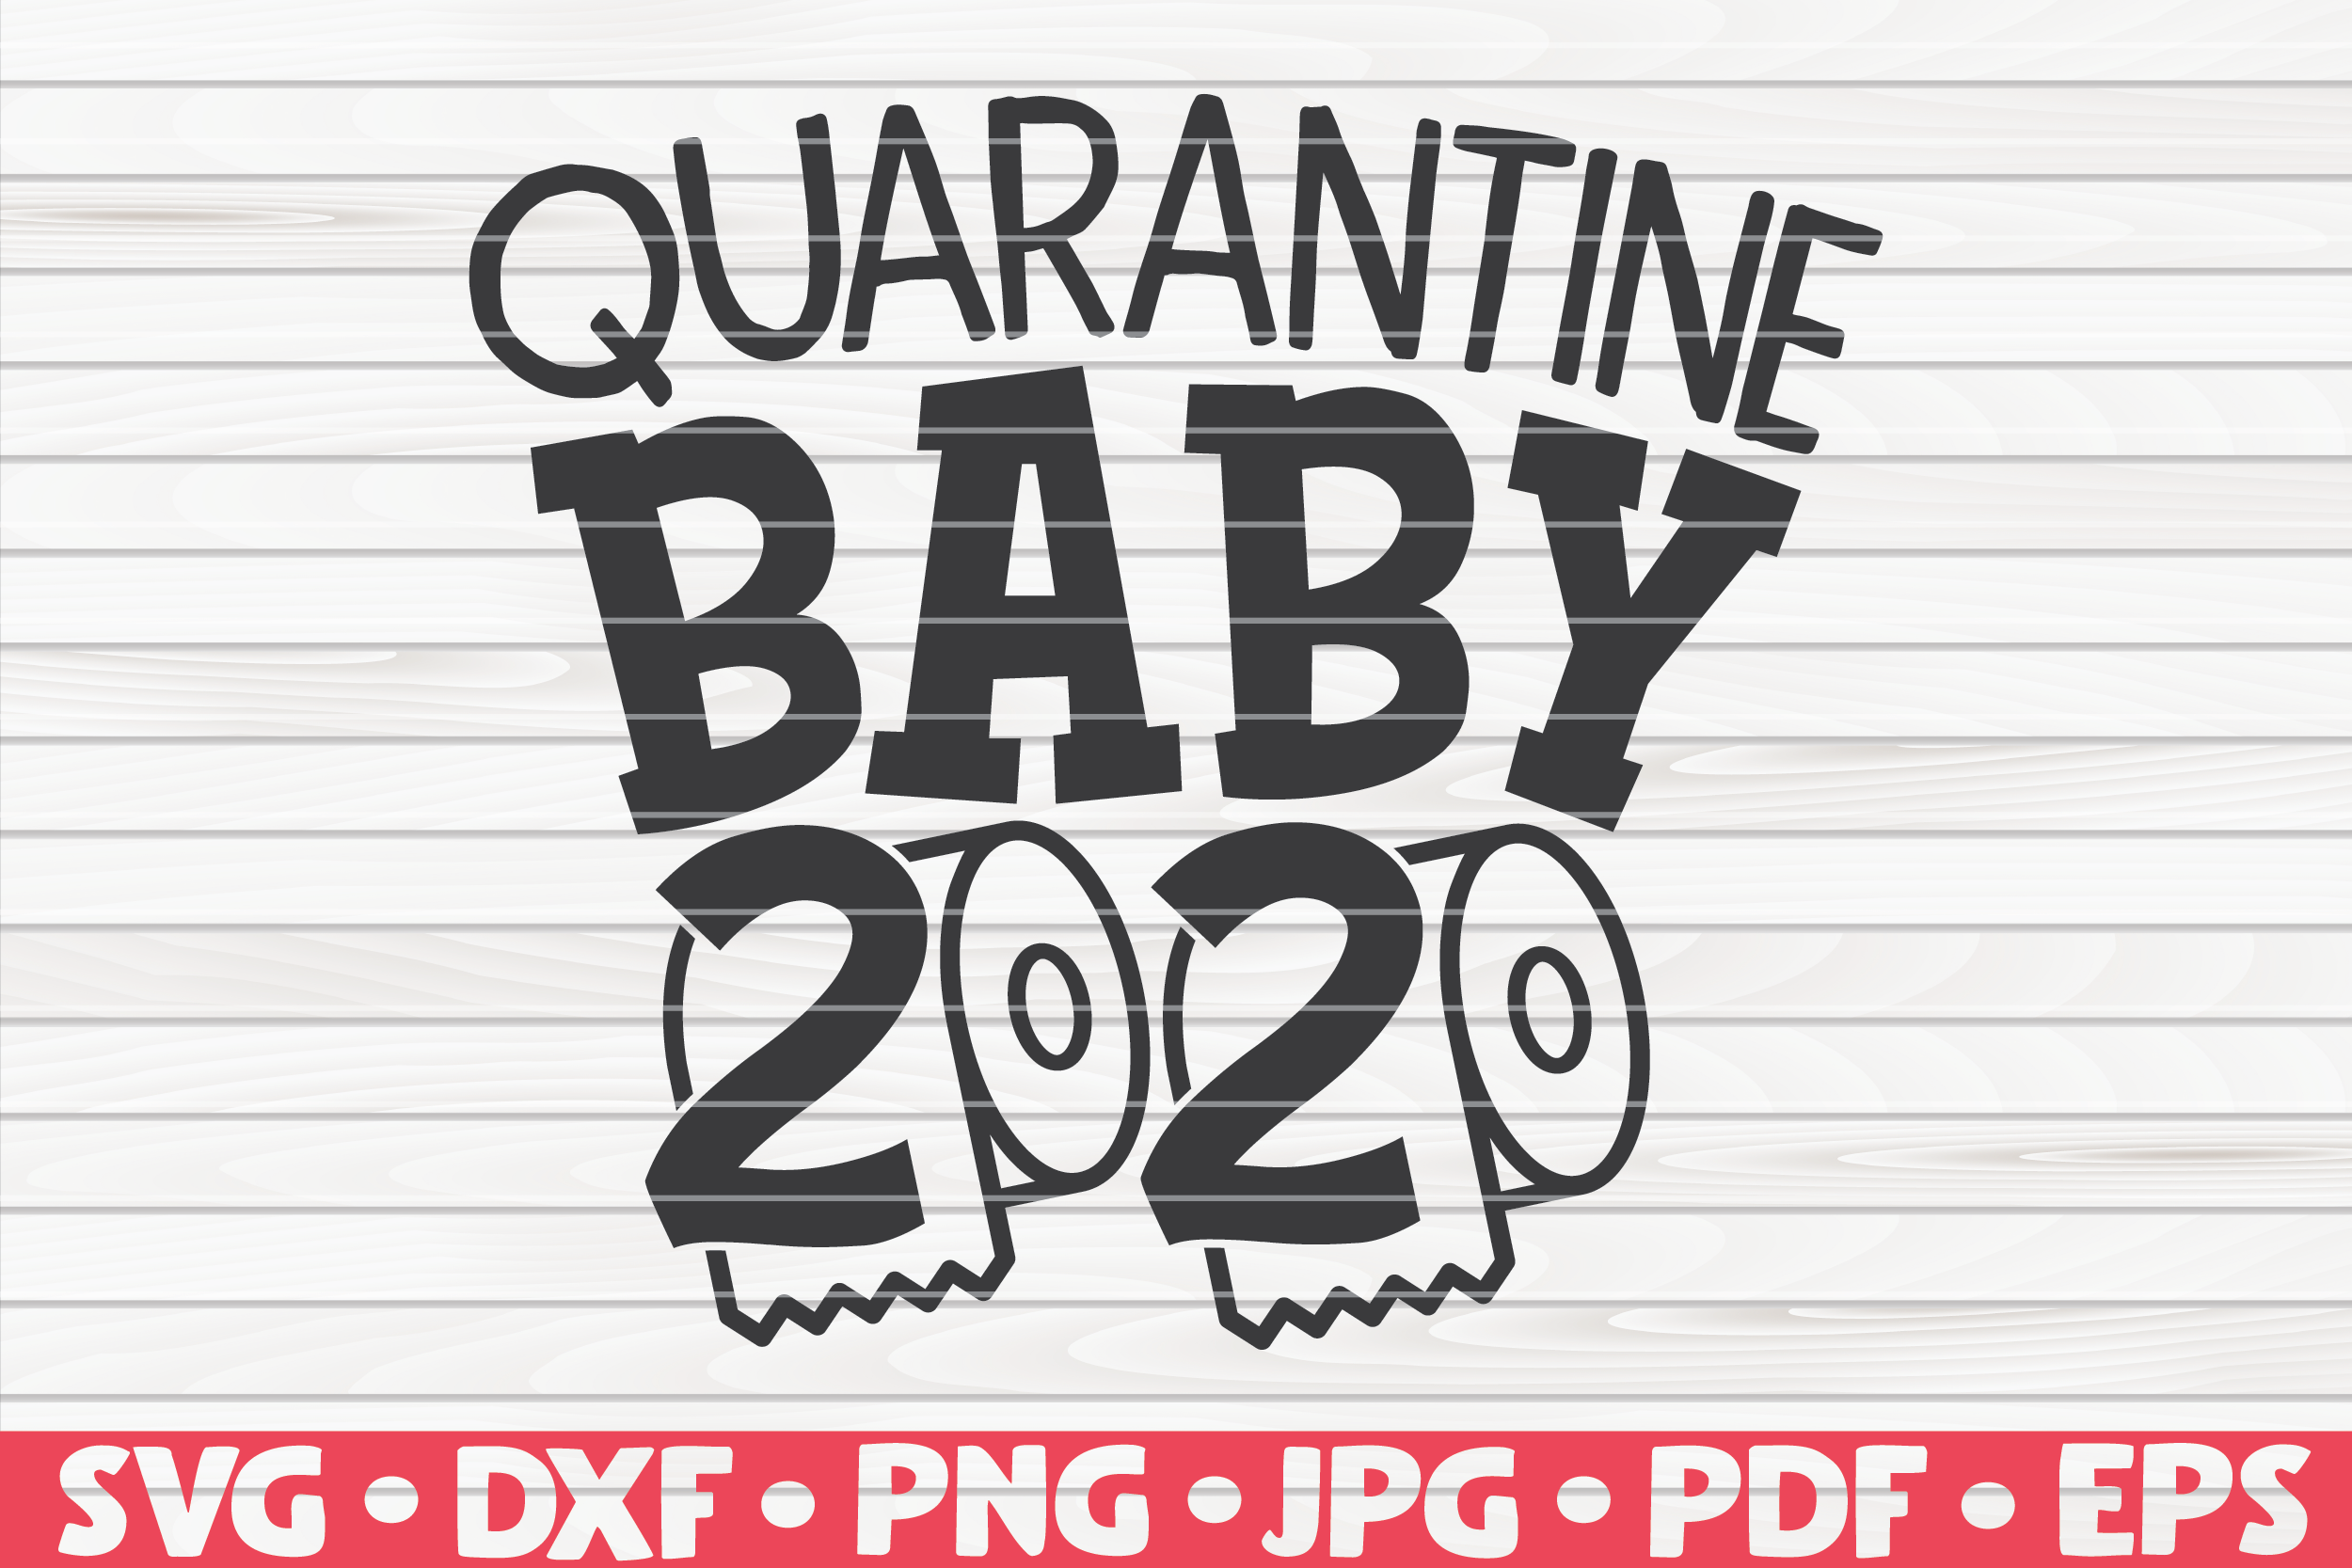 Download Quarantine Baby 2020 Svg Quarantine Social Distancing By Hqdigitalart Thehungryjpeg Com